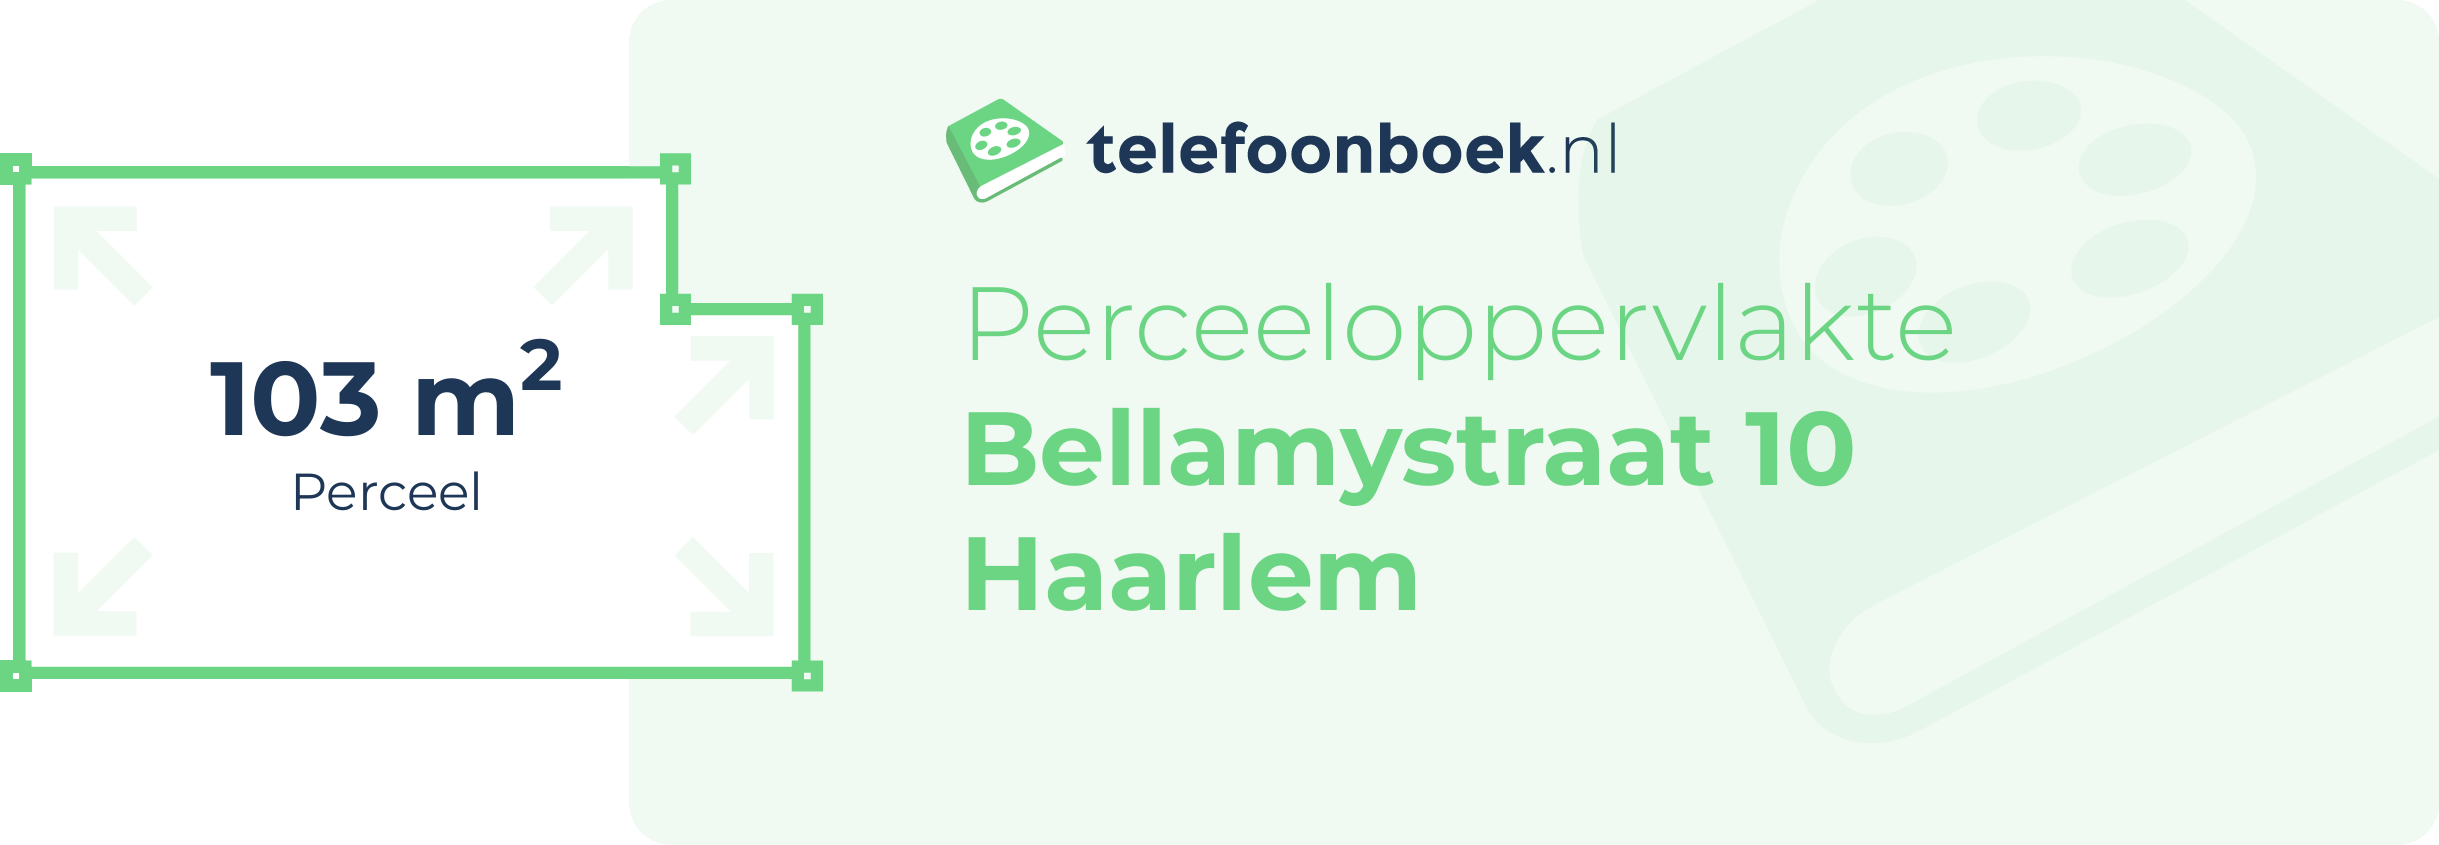 Perceeloppervlakte Bellamystraat 10 Haarlem